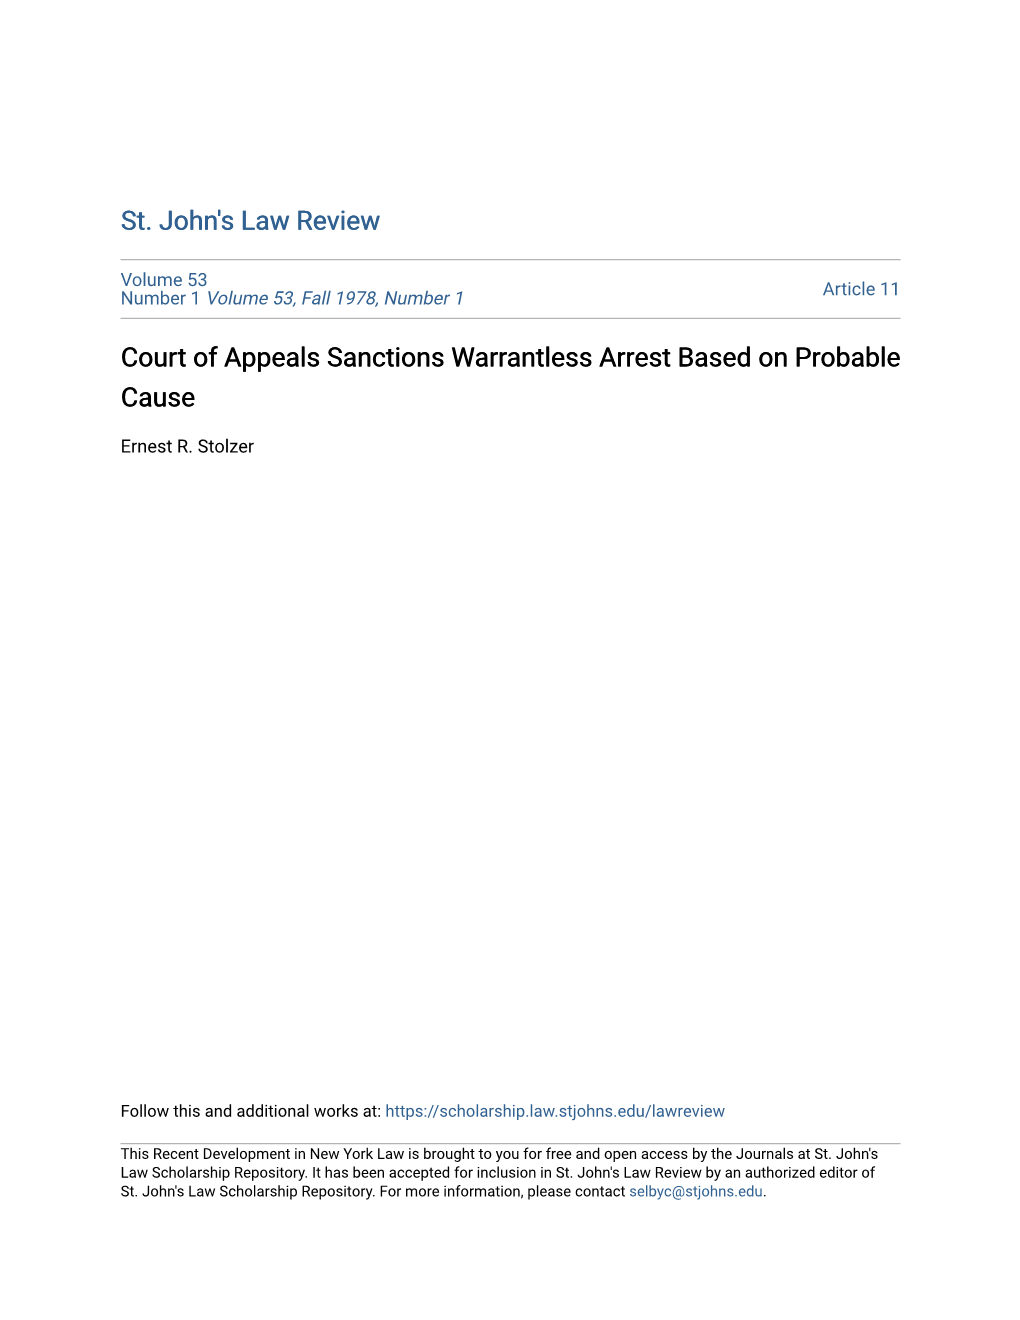 Court of Appeals Sanctions Warrantless Arrest Based on Probable Cause